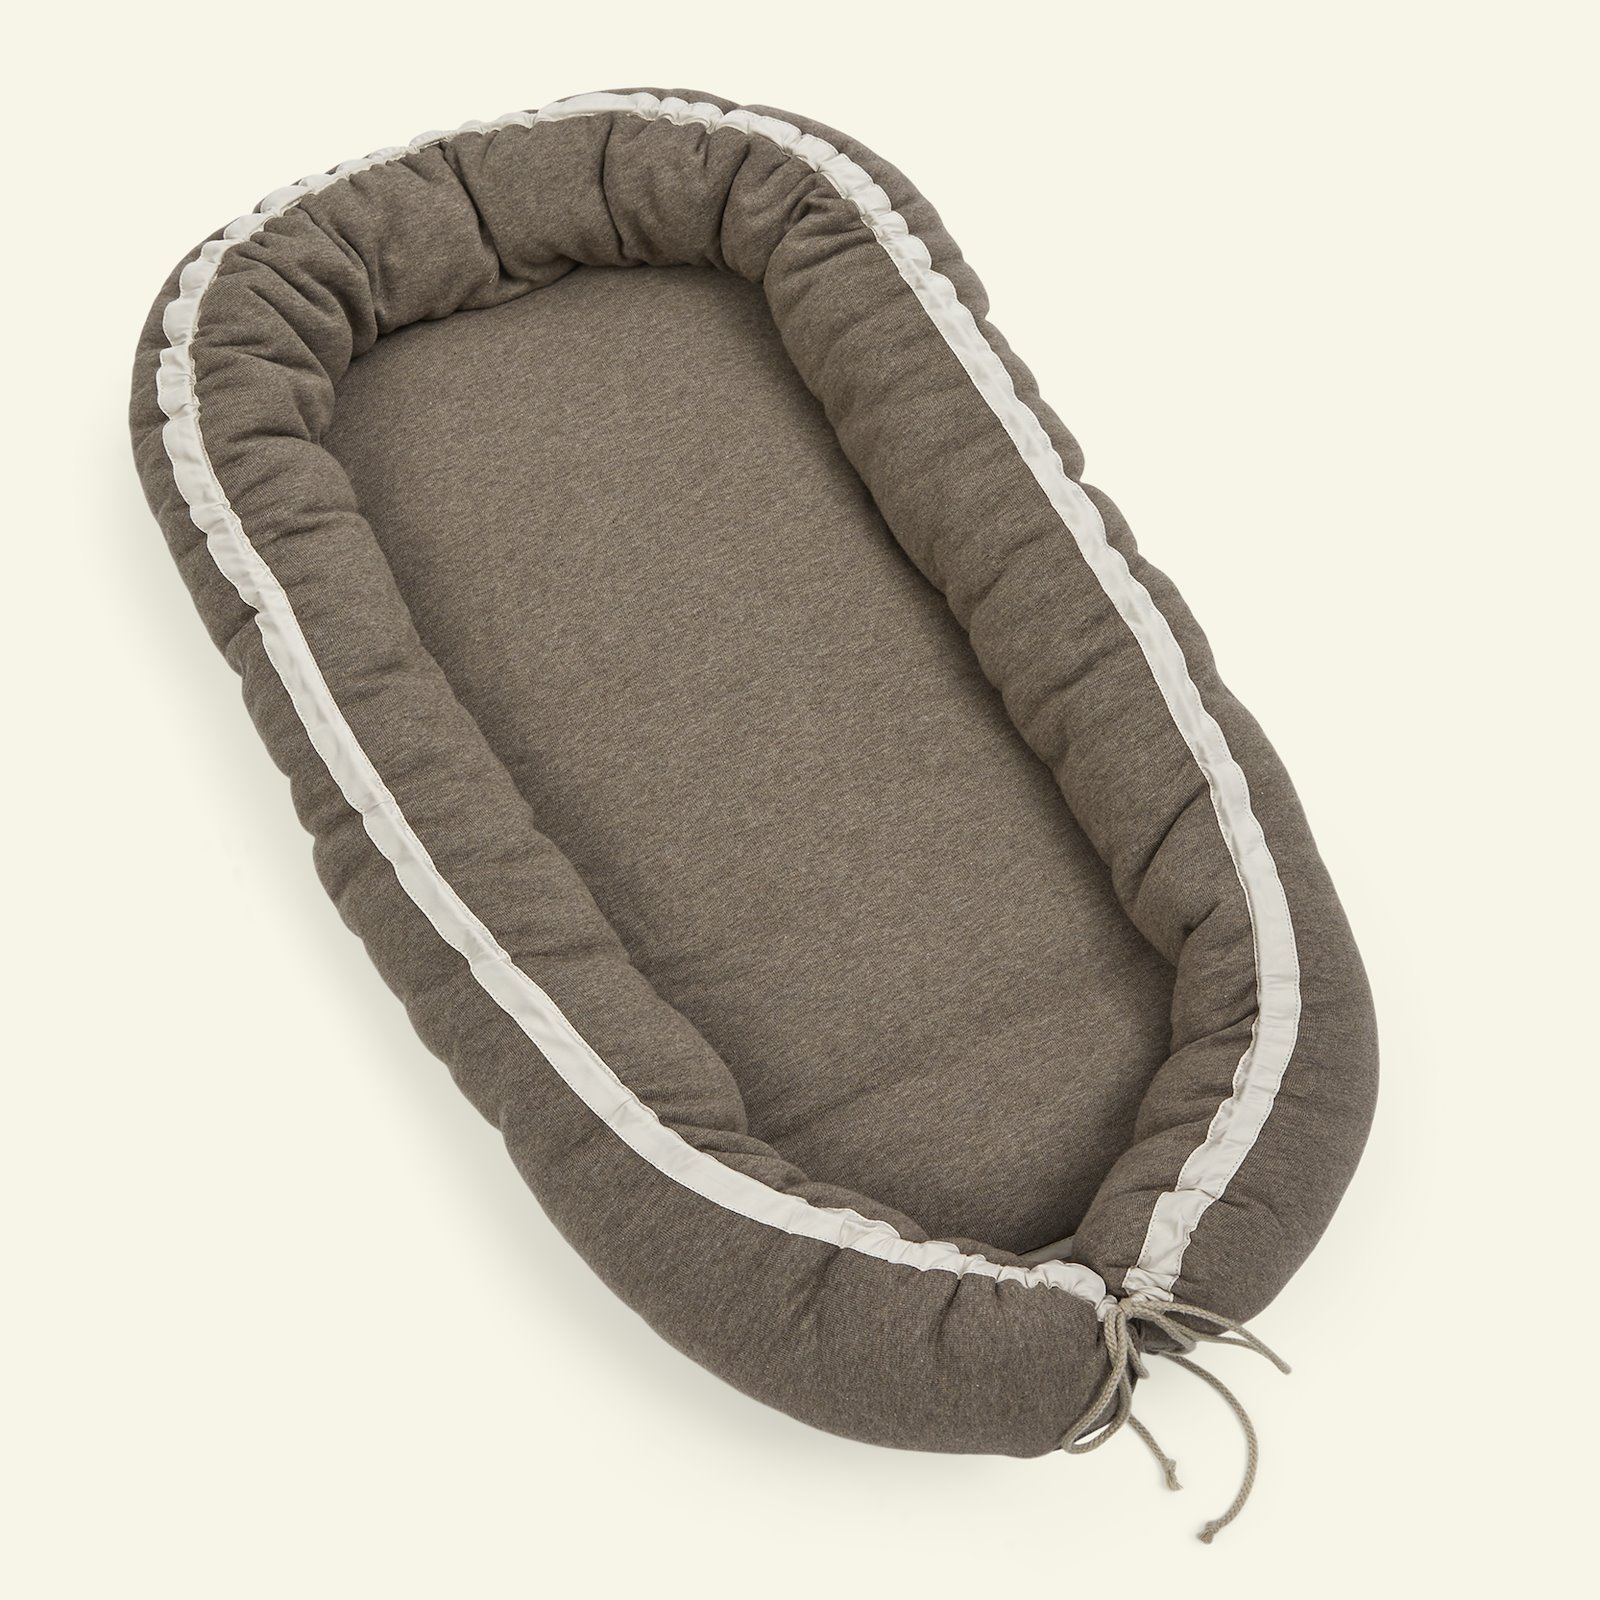 Baby nest and sleeping bag 8101300000_8101300100_8101300200_8101300300_8101300400_sskit